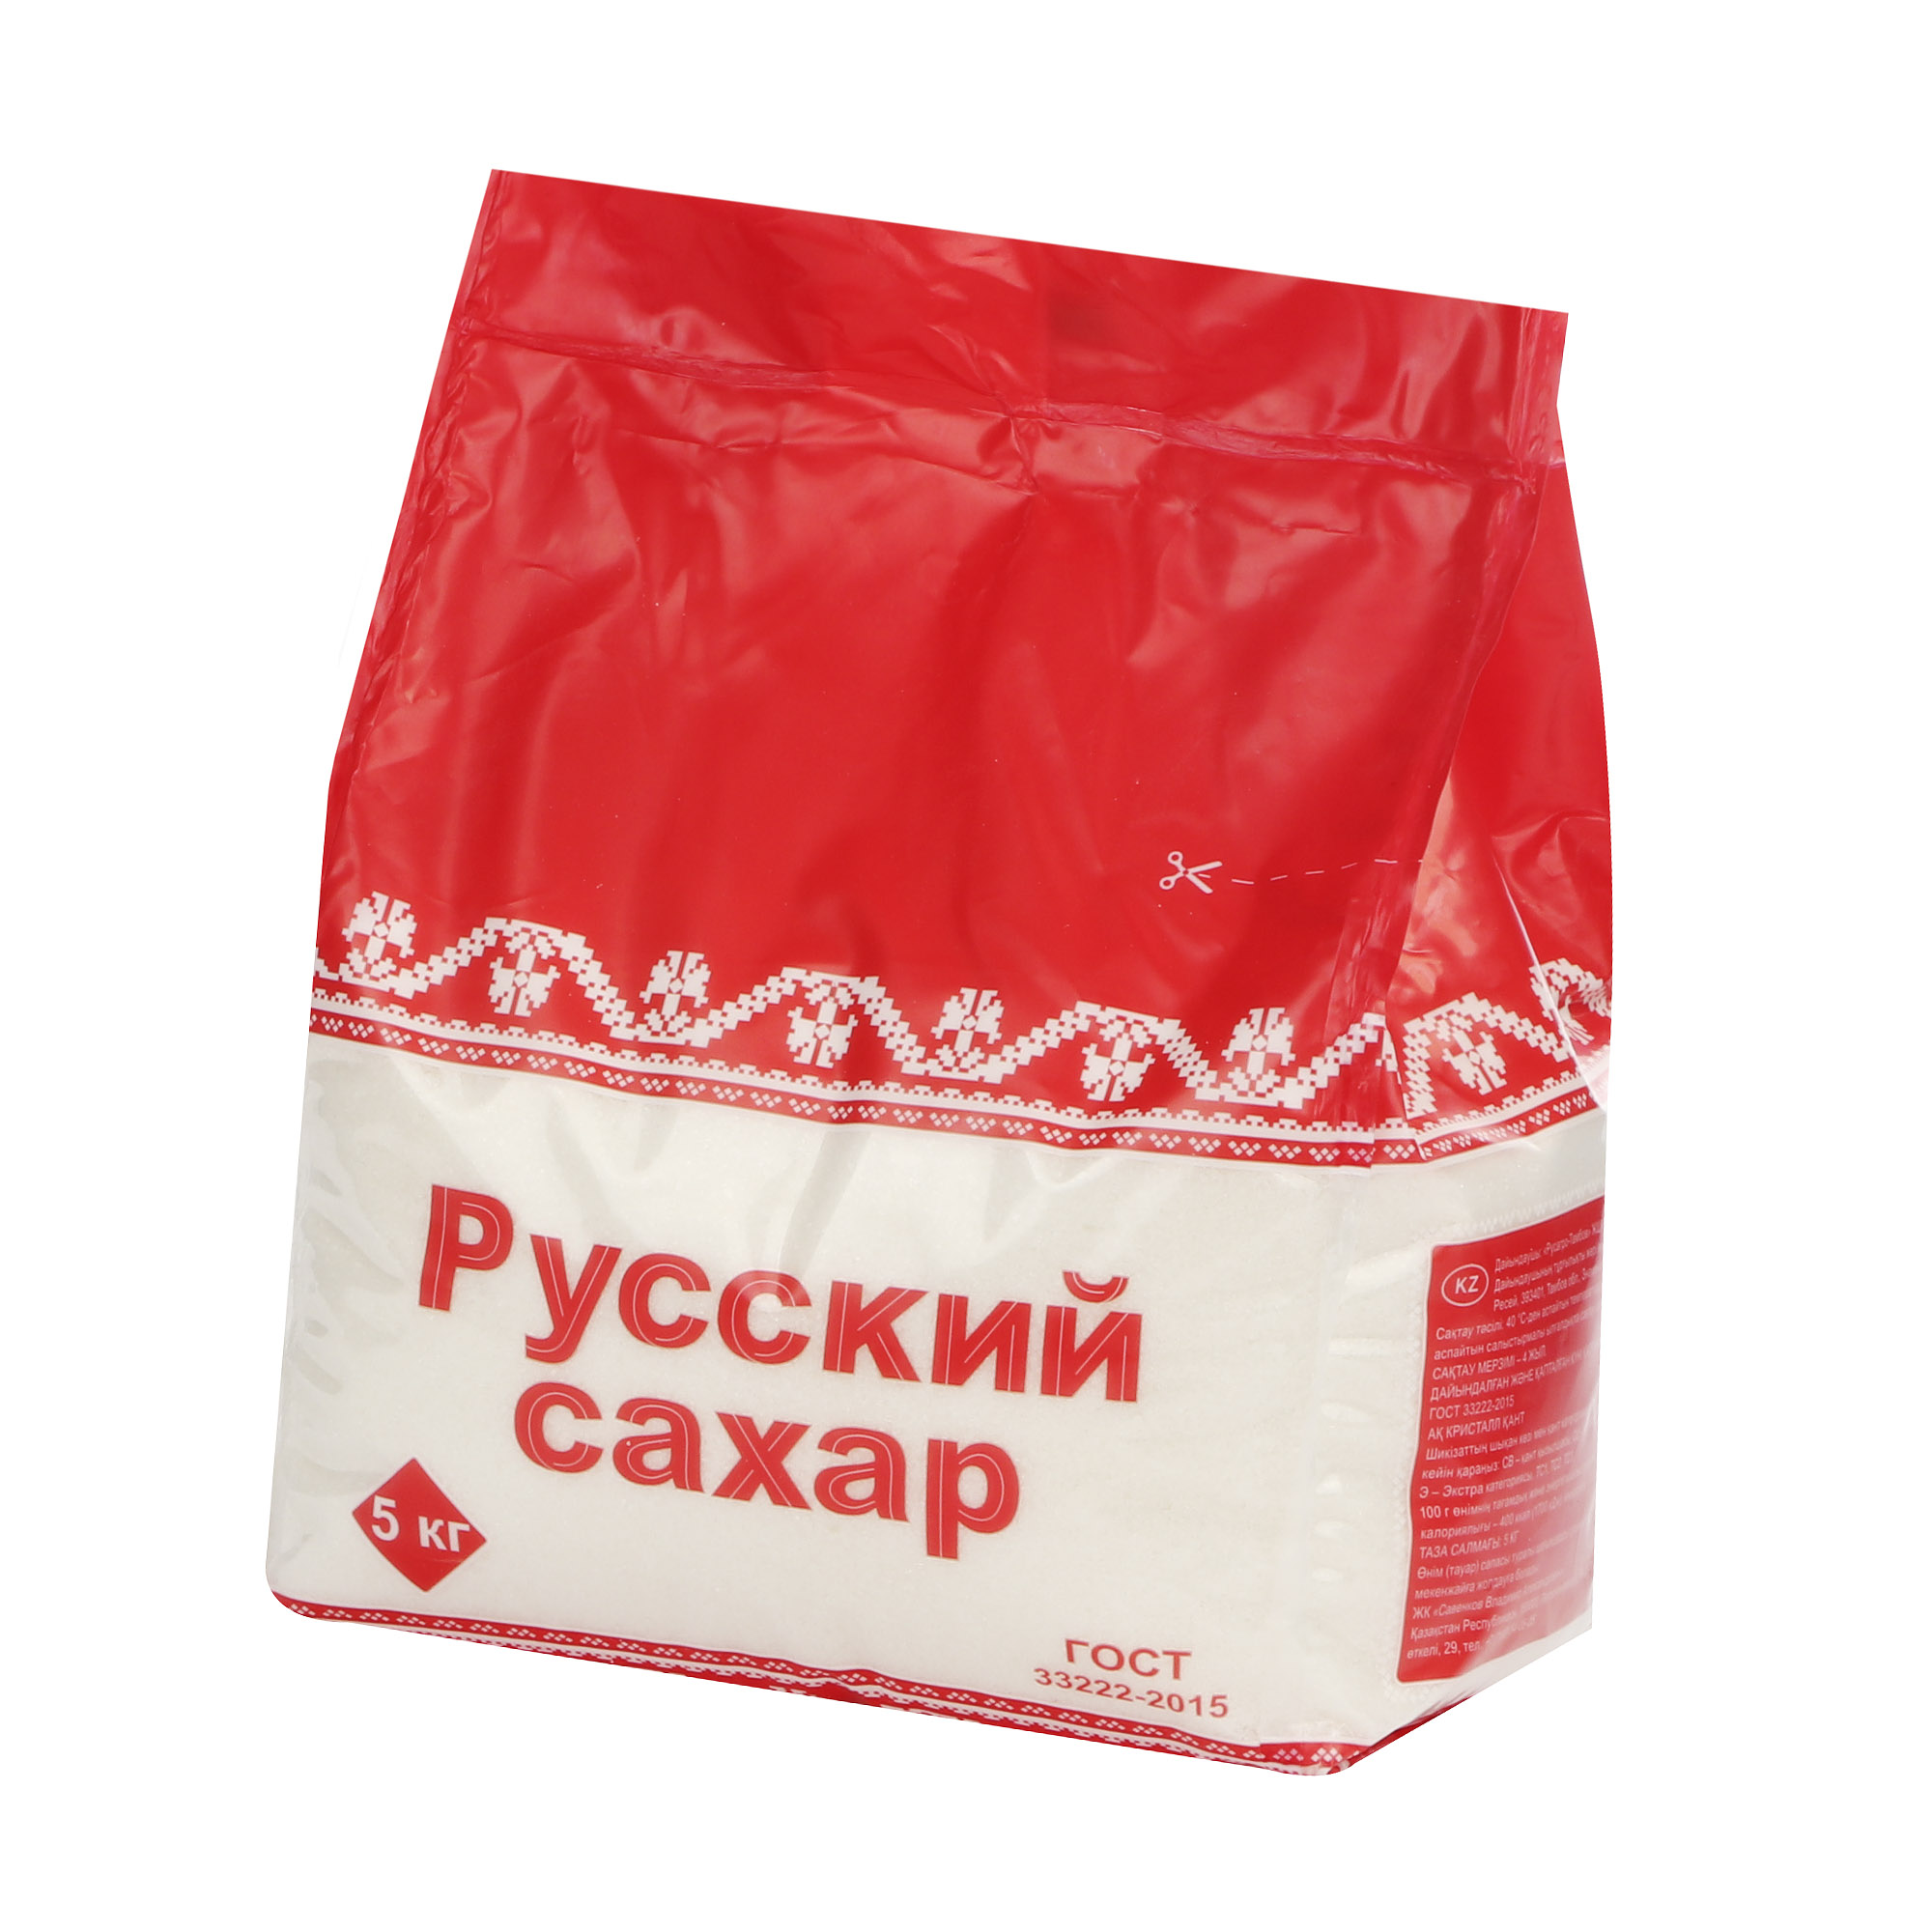 Сахар 1 кг. Сахар-песок русский сахар 5кг. Сахар русский сахар 5 кг. Сахар русский сахар сахар-песок 10 кг. Сахар песок русский 5кг.